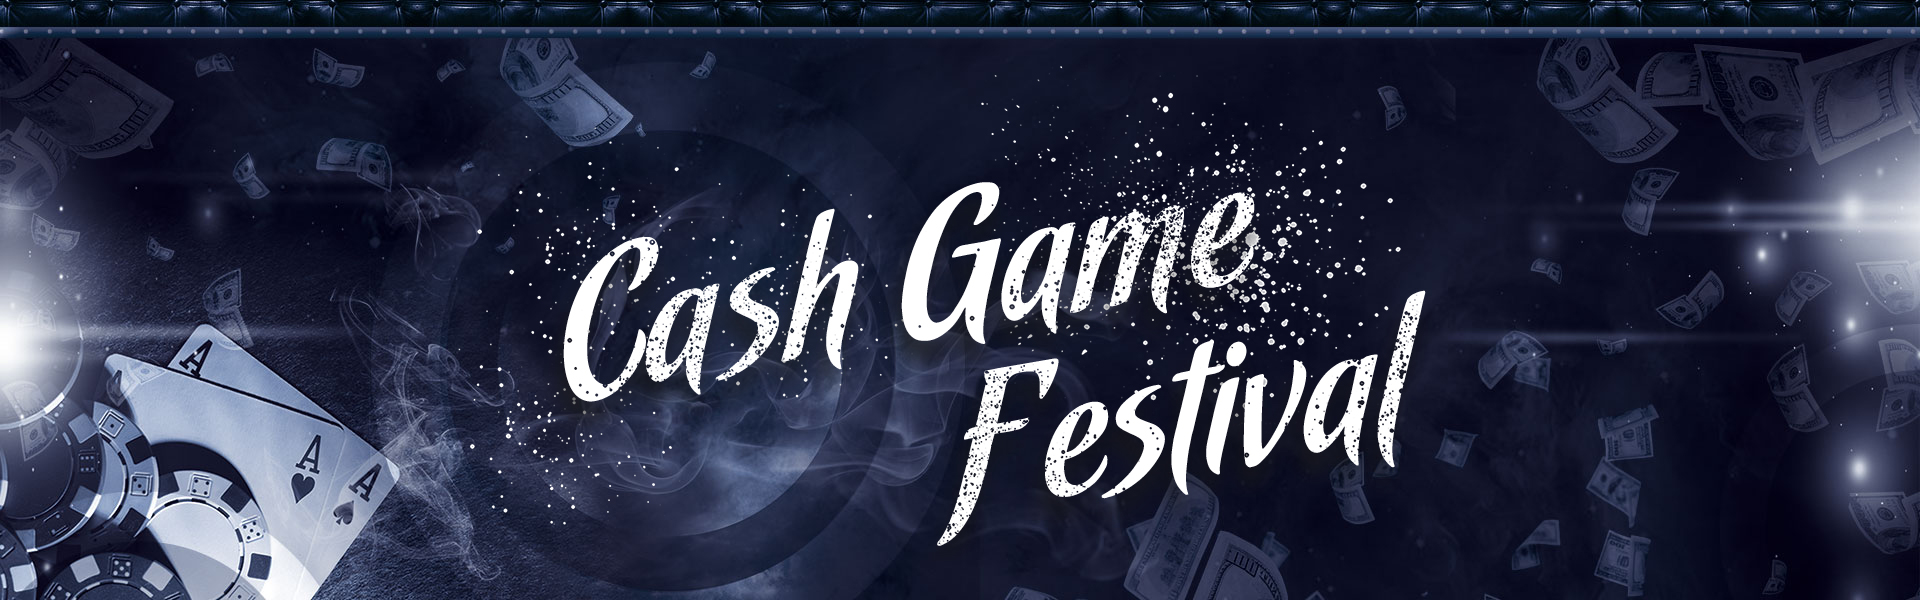 Cash Game Festival